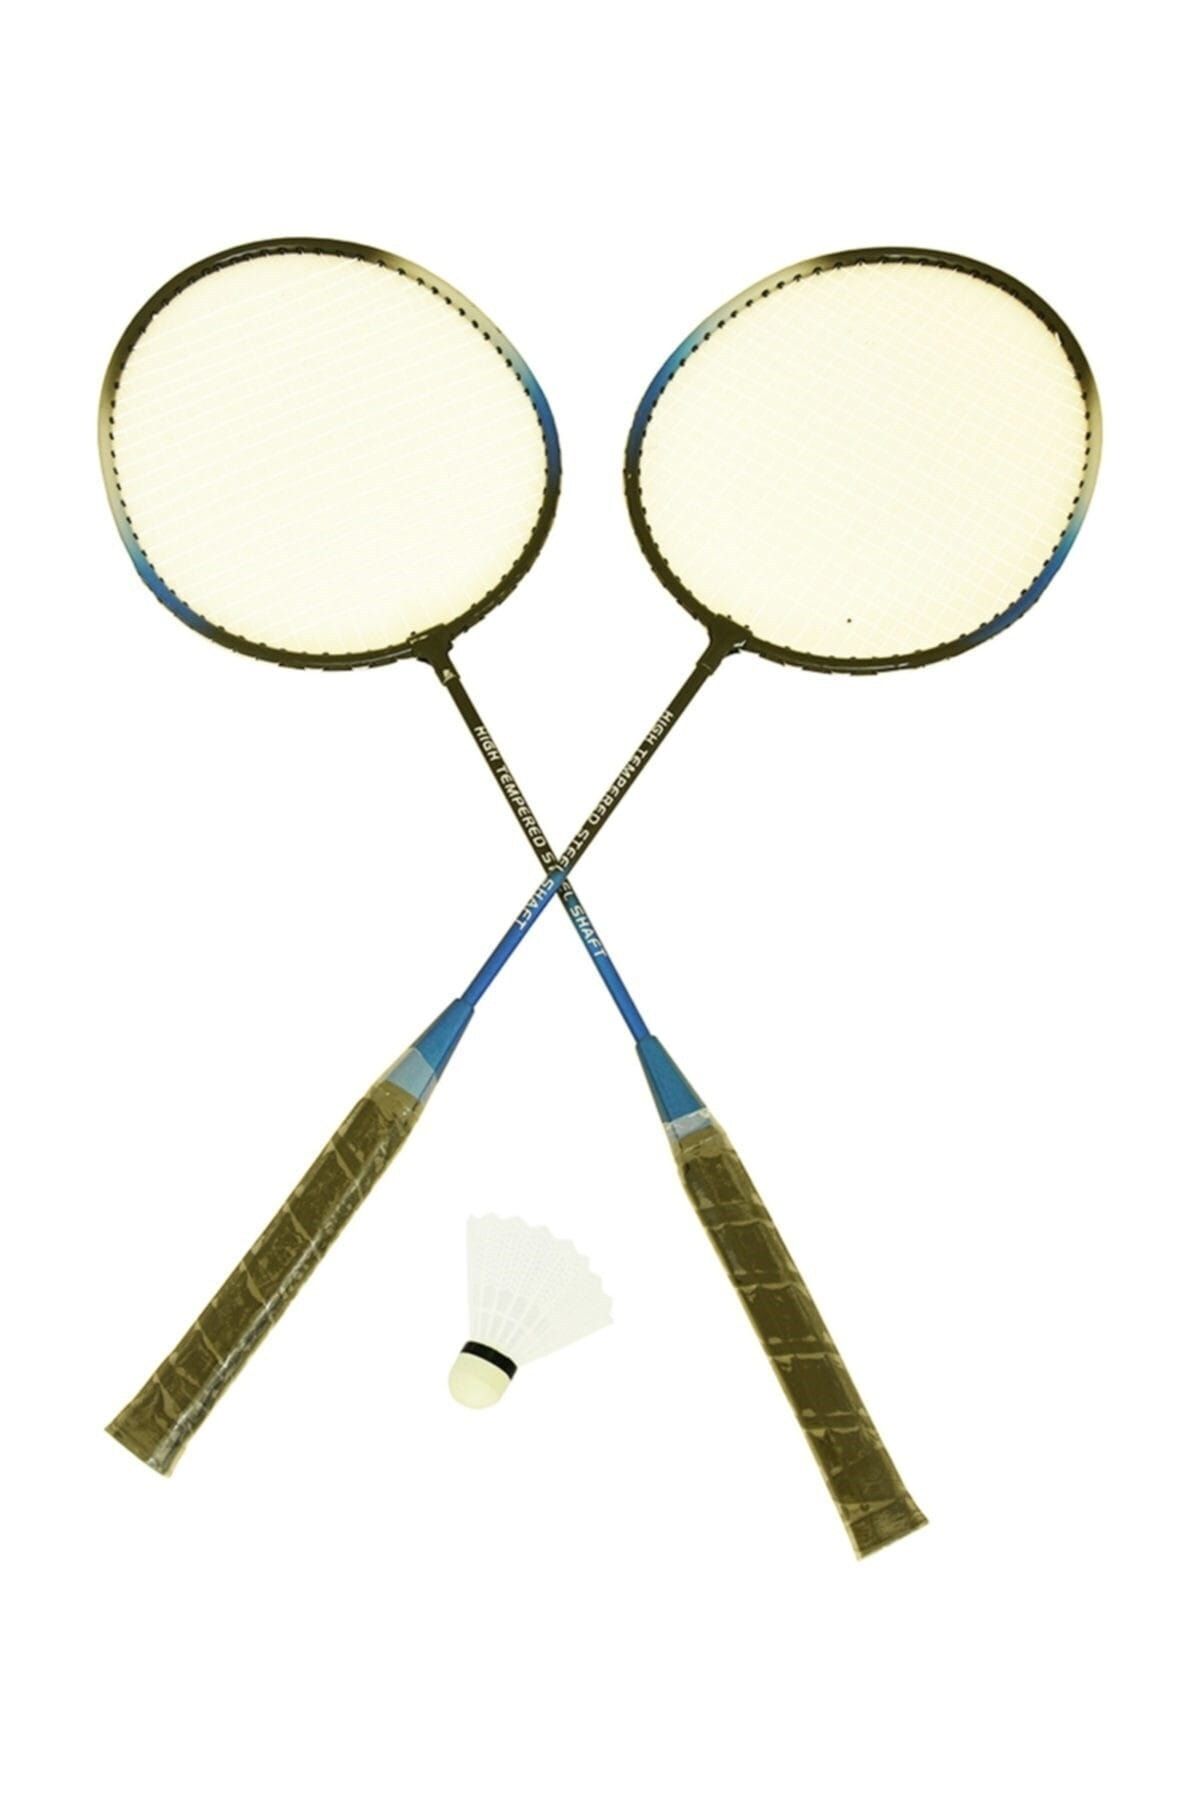 Vertex 2 Raket 1 Top Badminton Raket Seti Dynamic